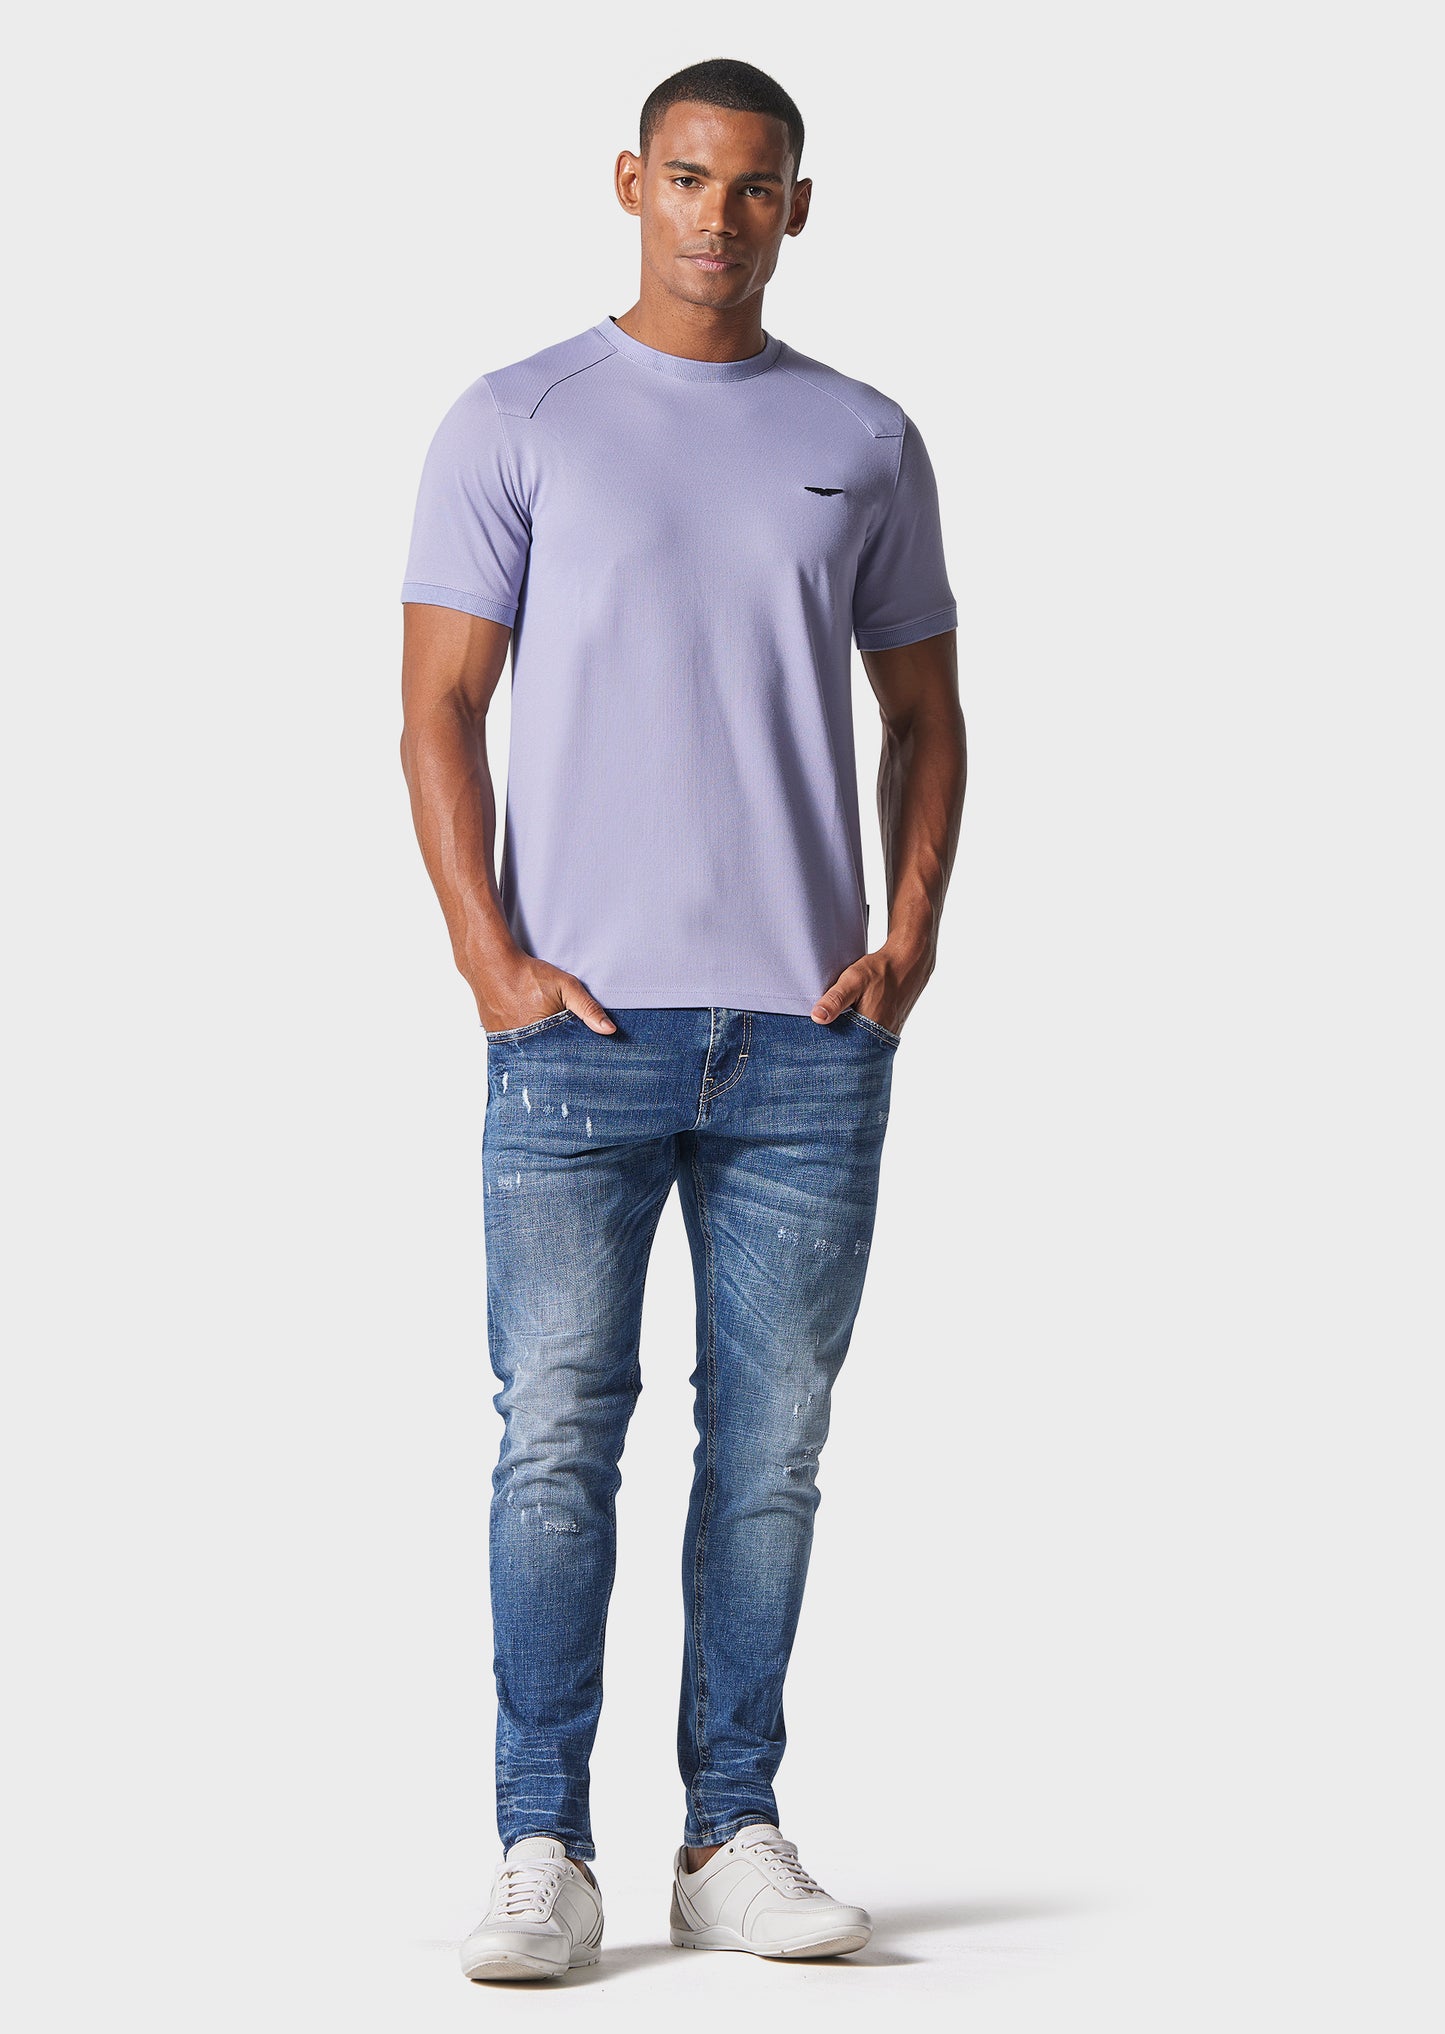 Perks Lavender T-Shirt